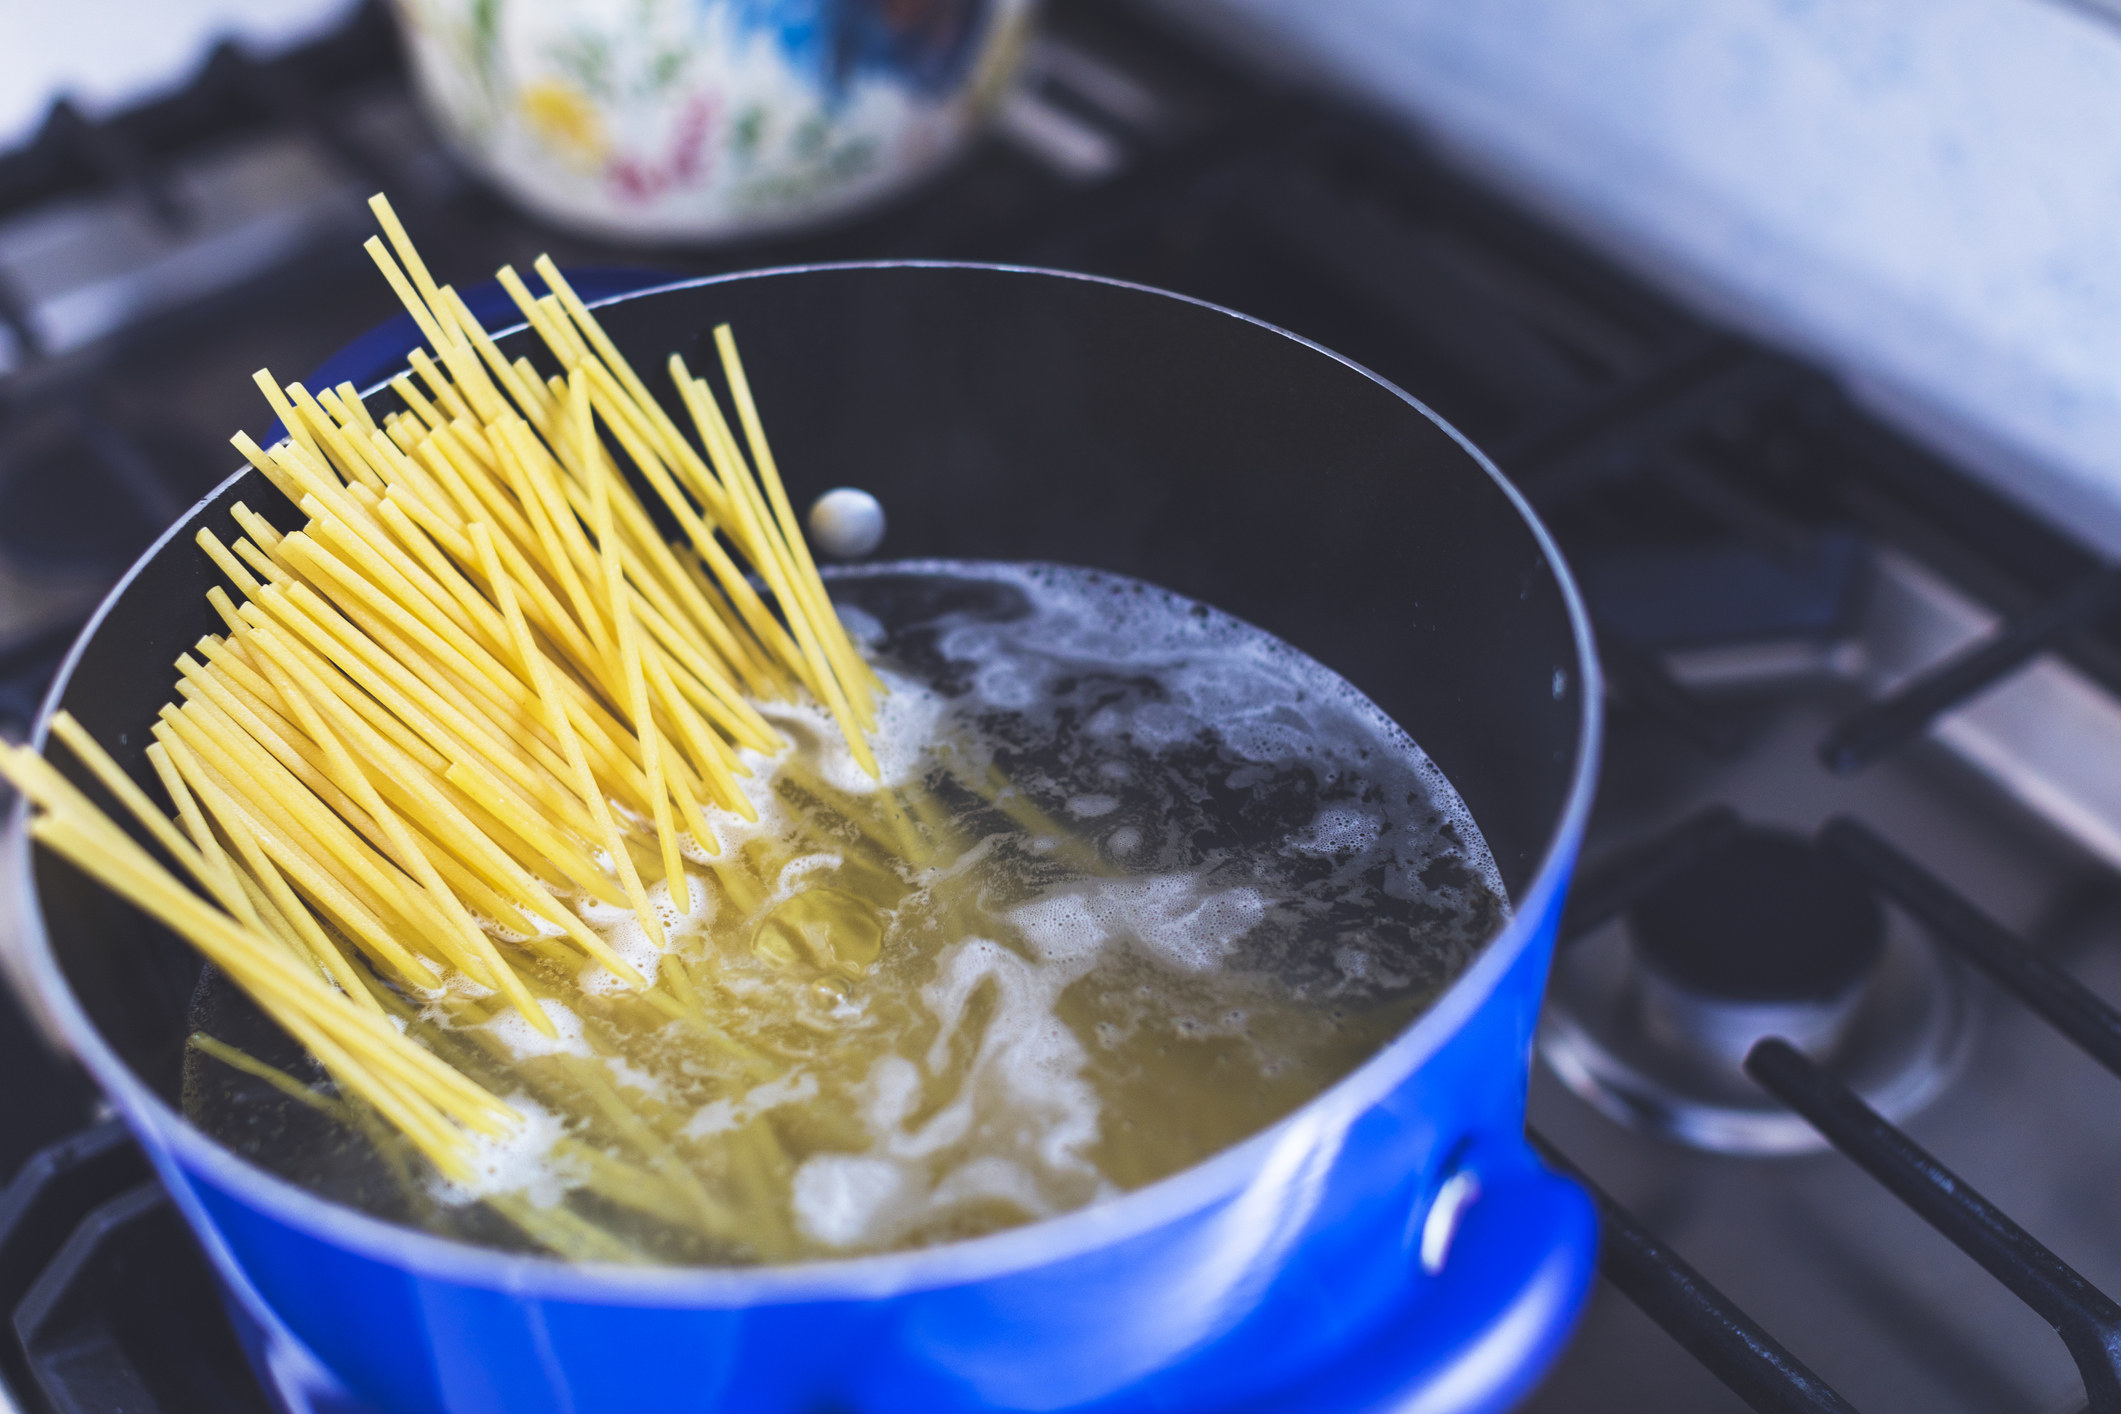 Cooking spaghetti in a pot.